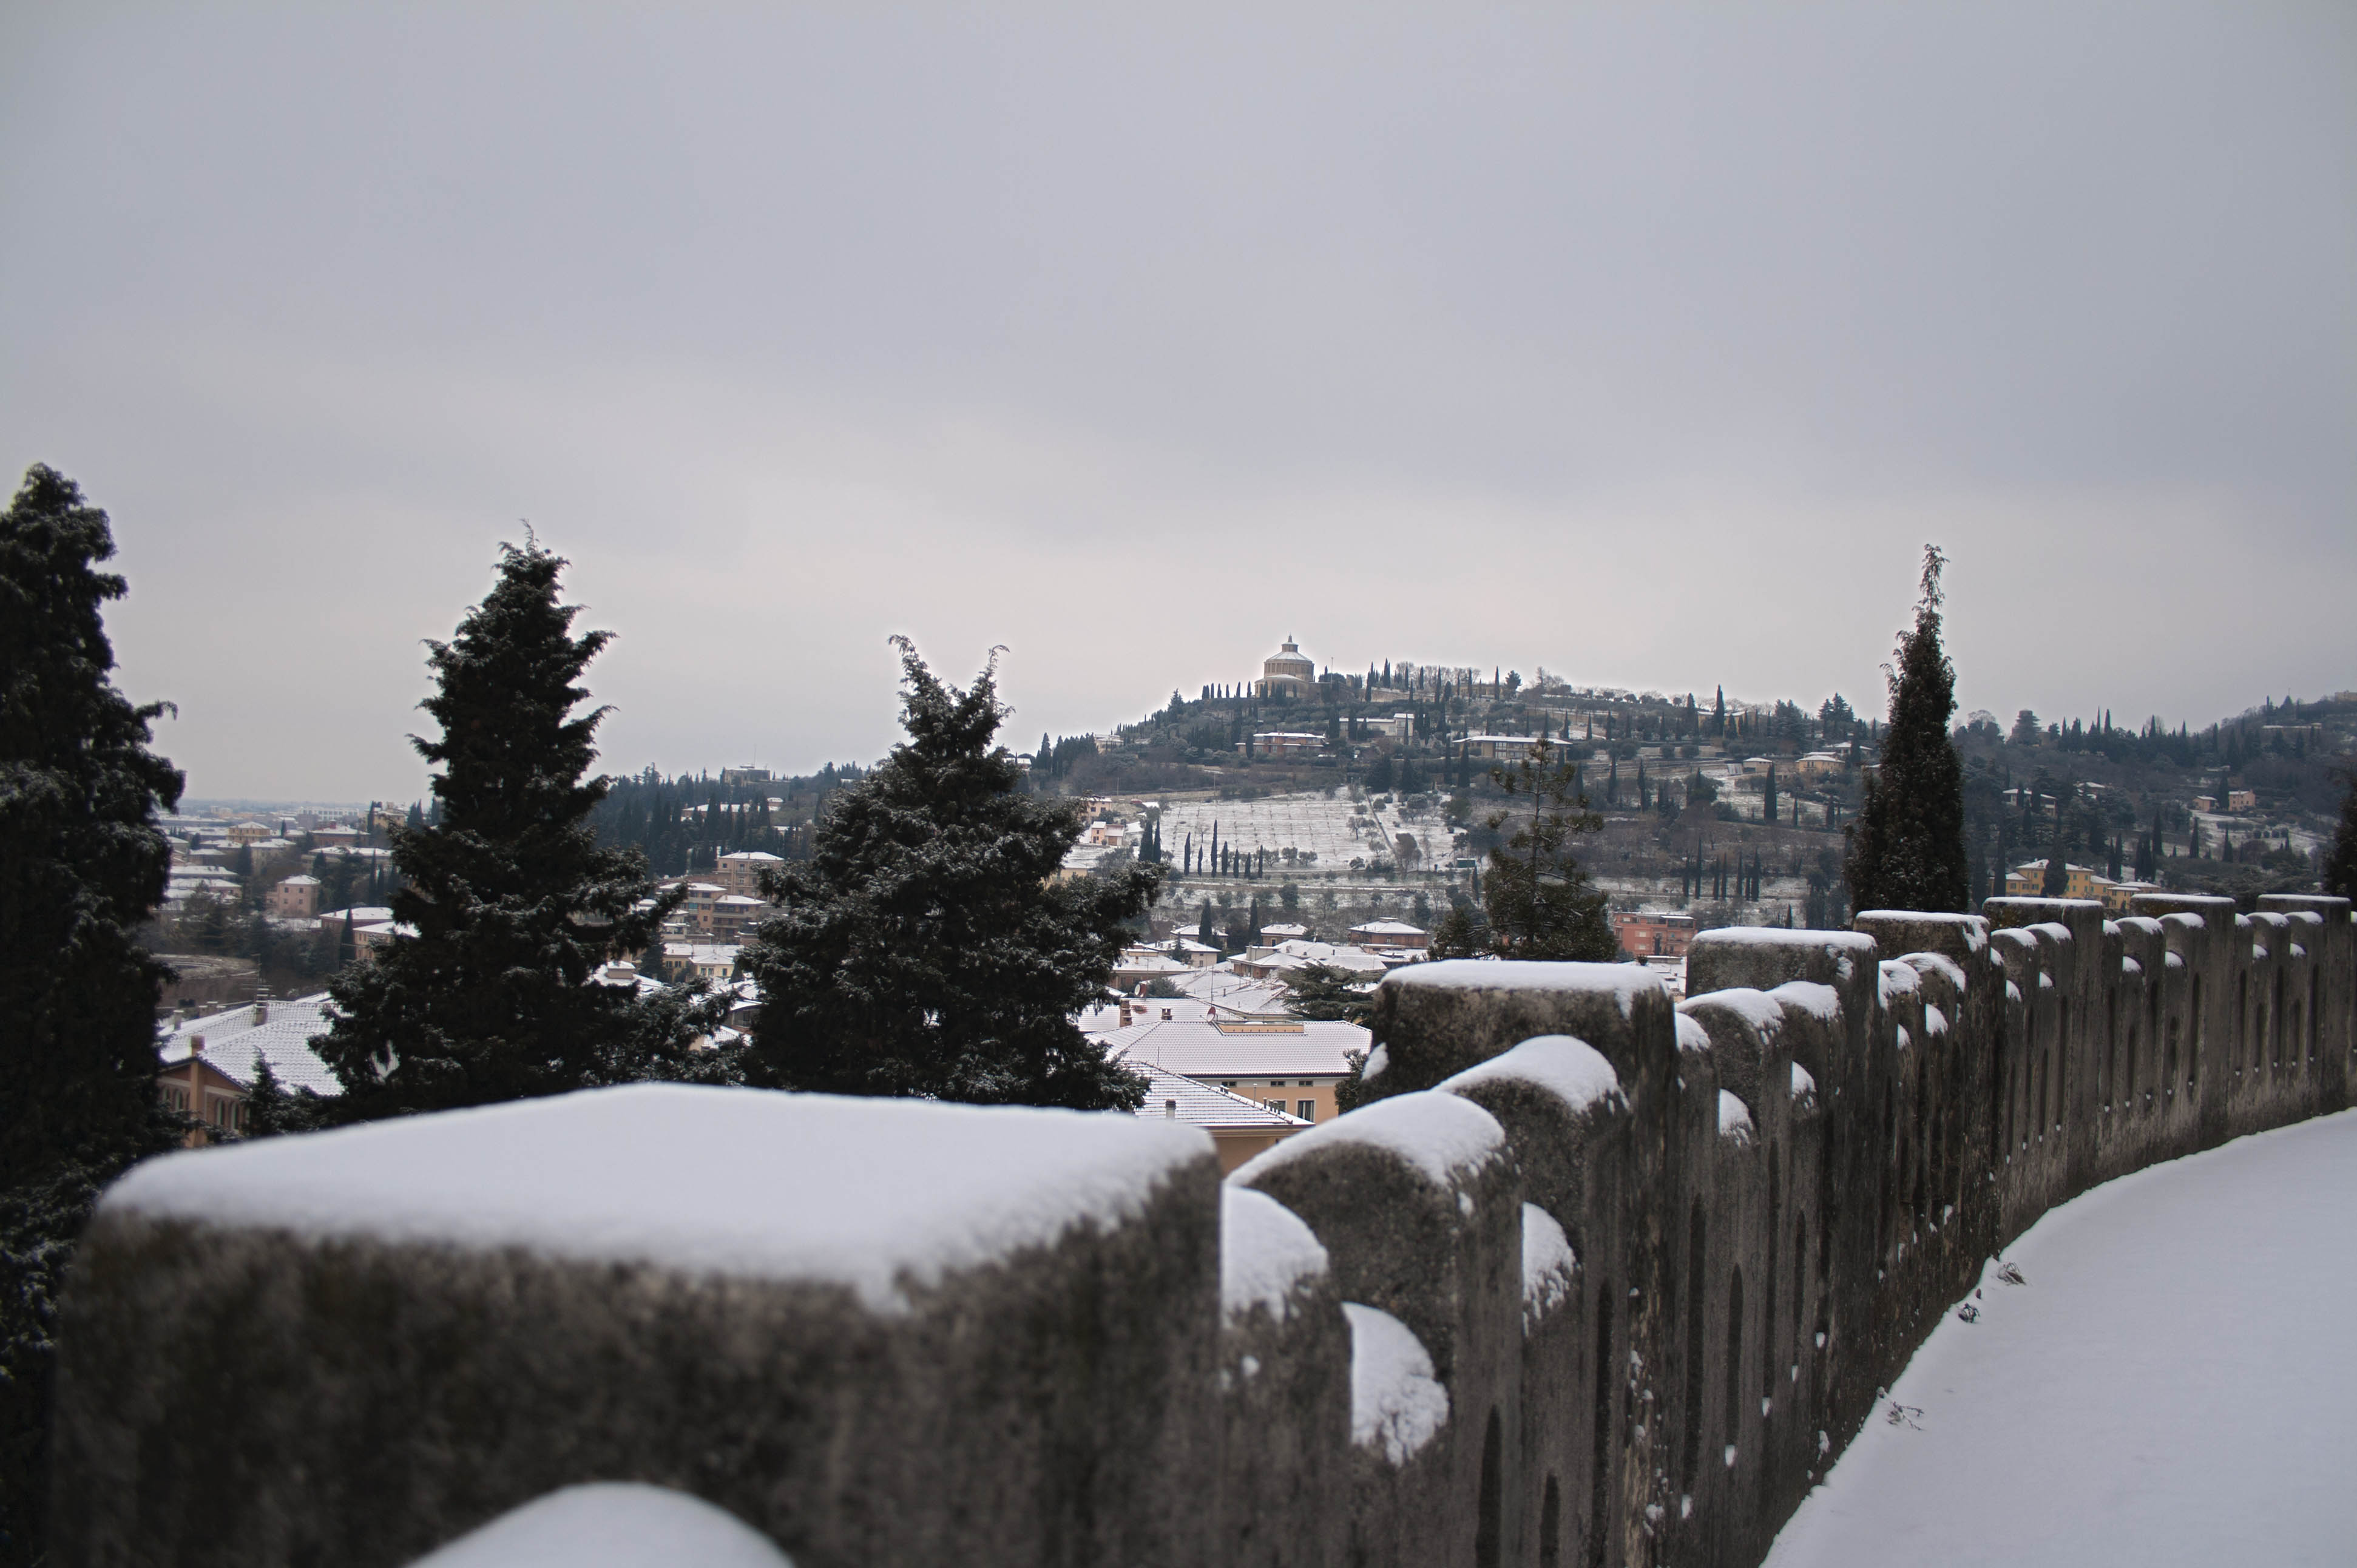 Verona Neve Vista del Santuario di Verona con la neve